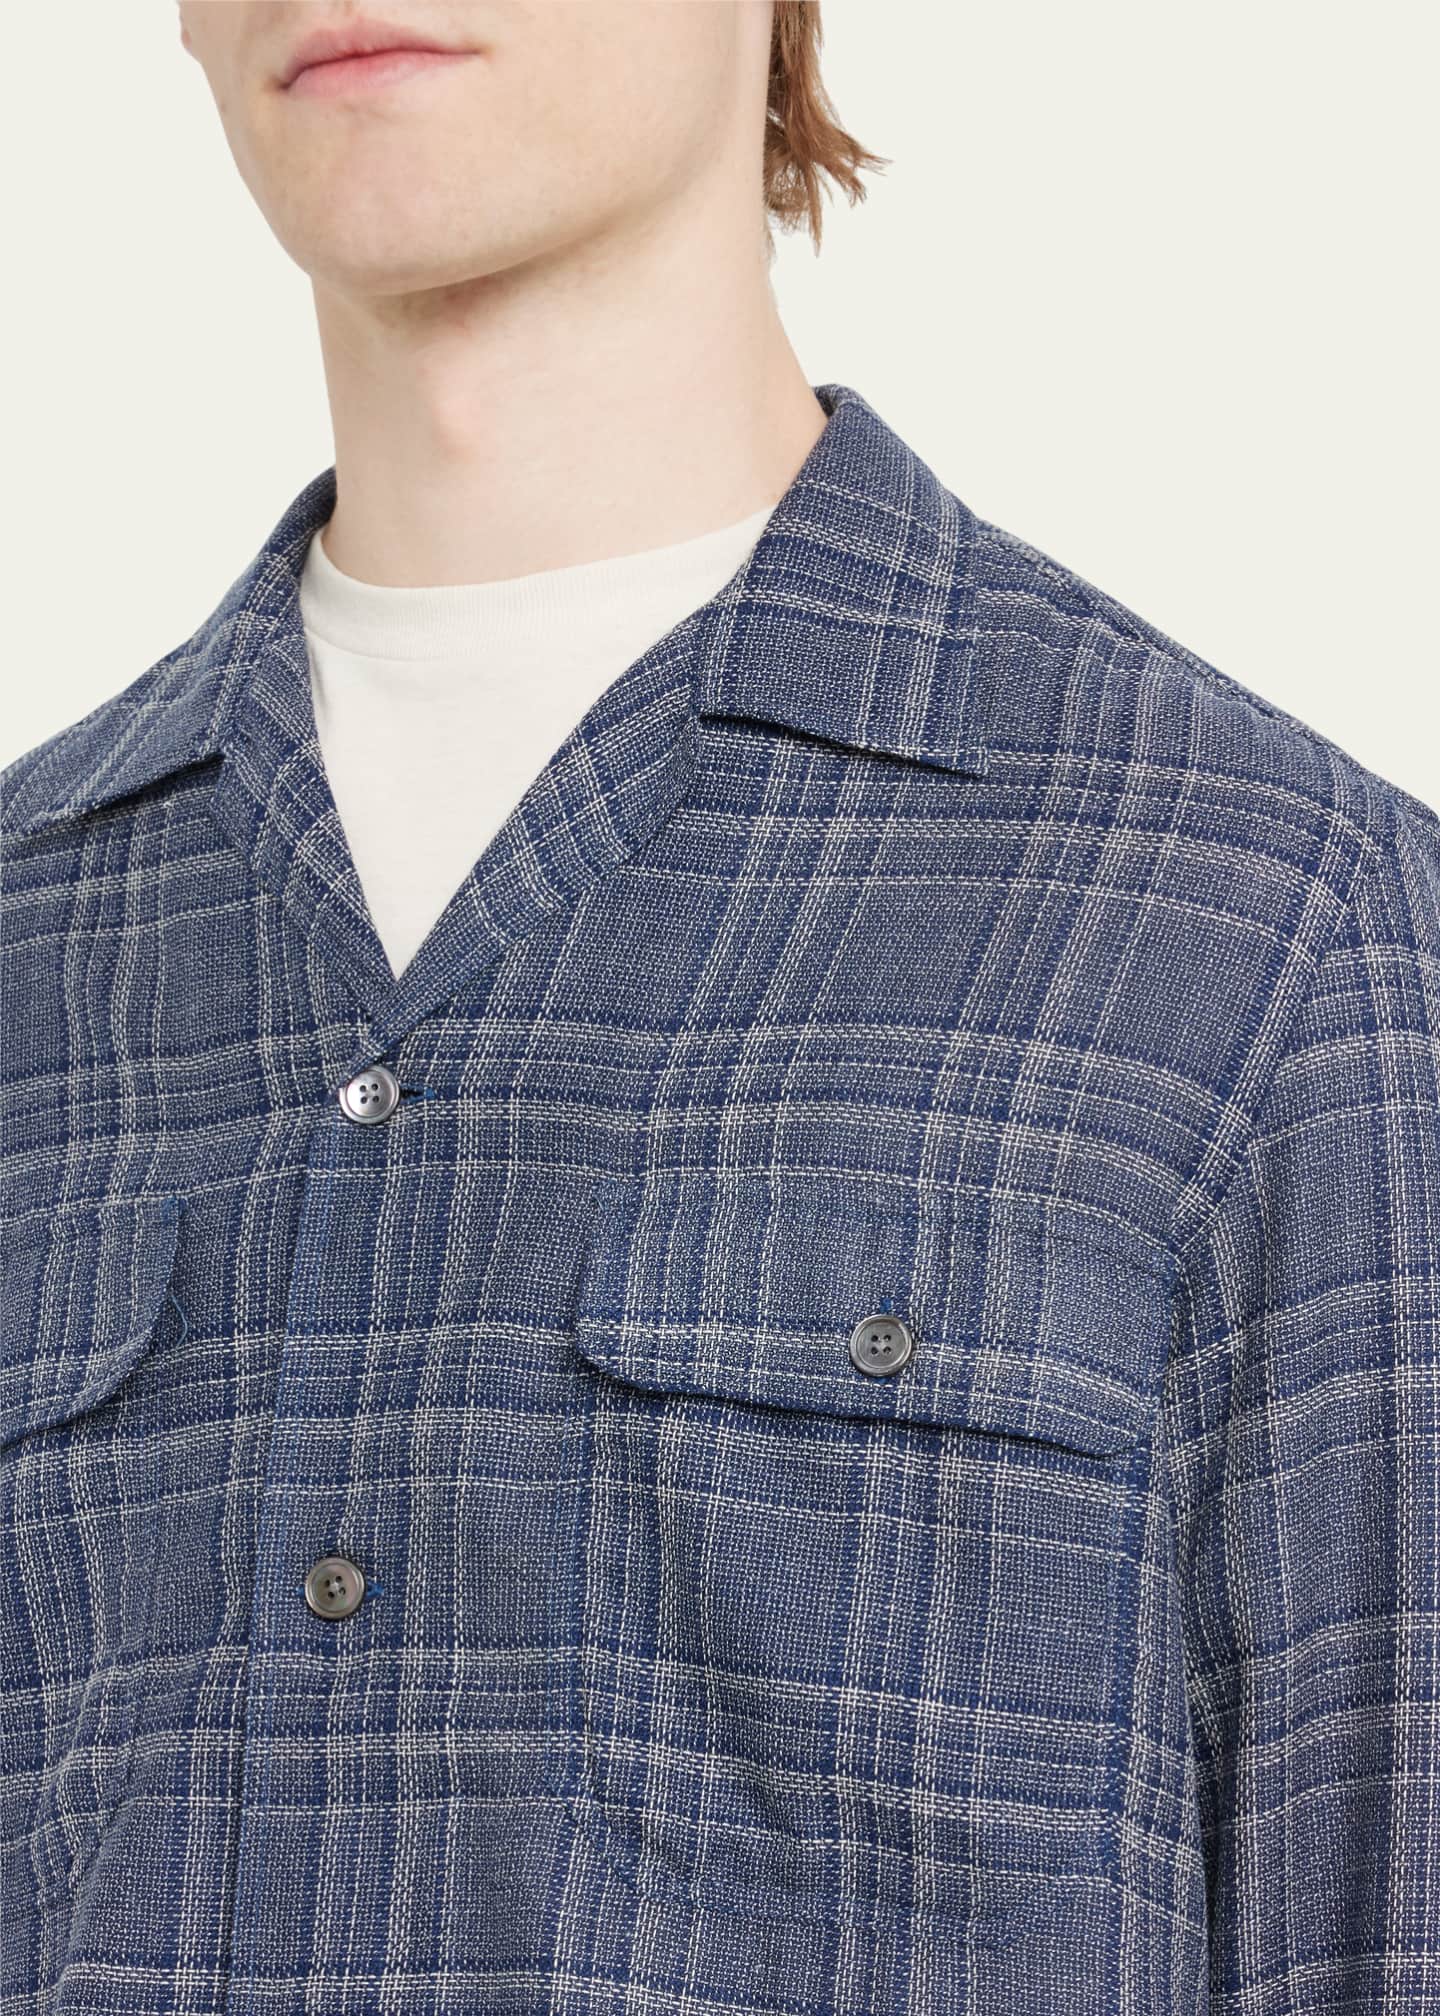 Salvatore Piccolo Men's Plaid Shirt Jacket - Bergdorf Goodman